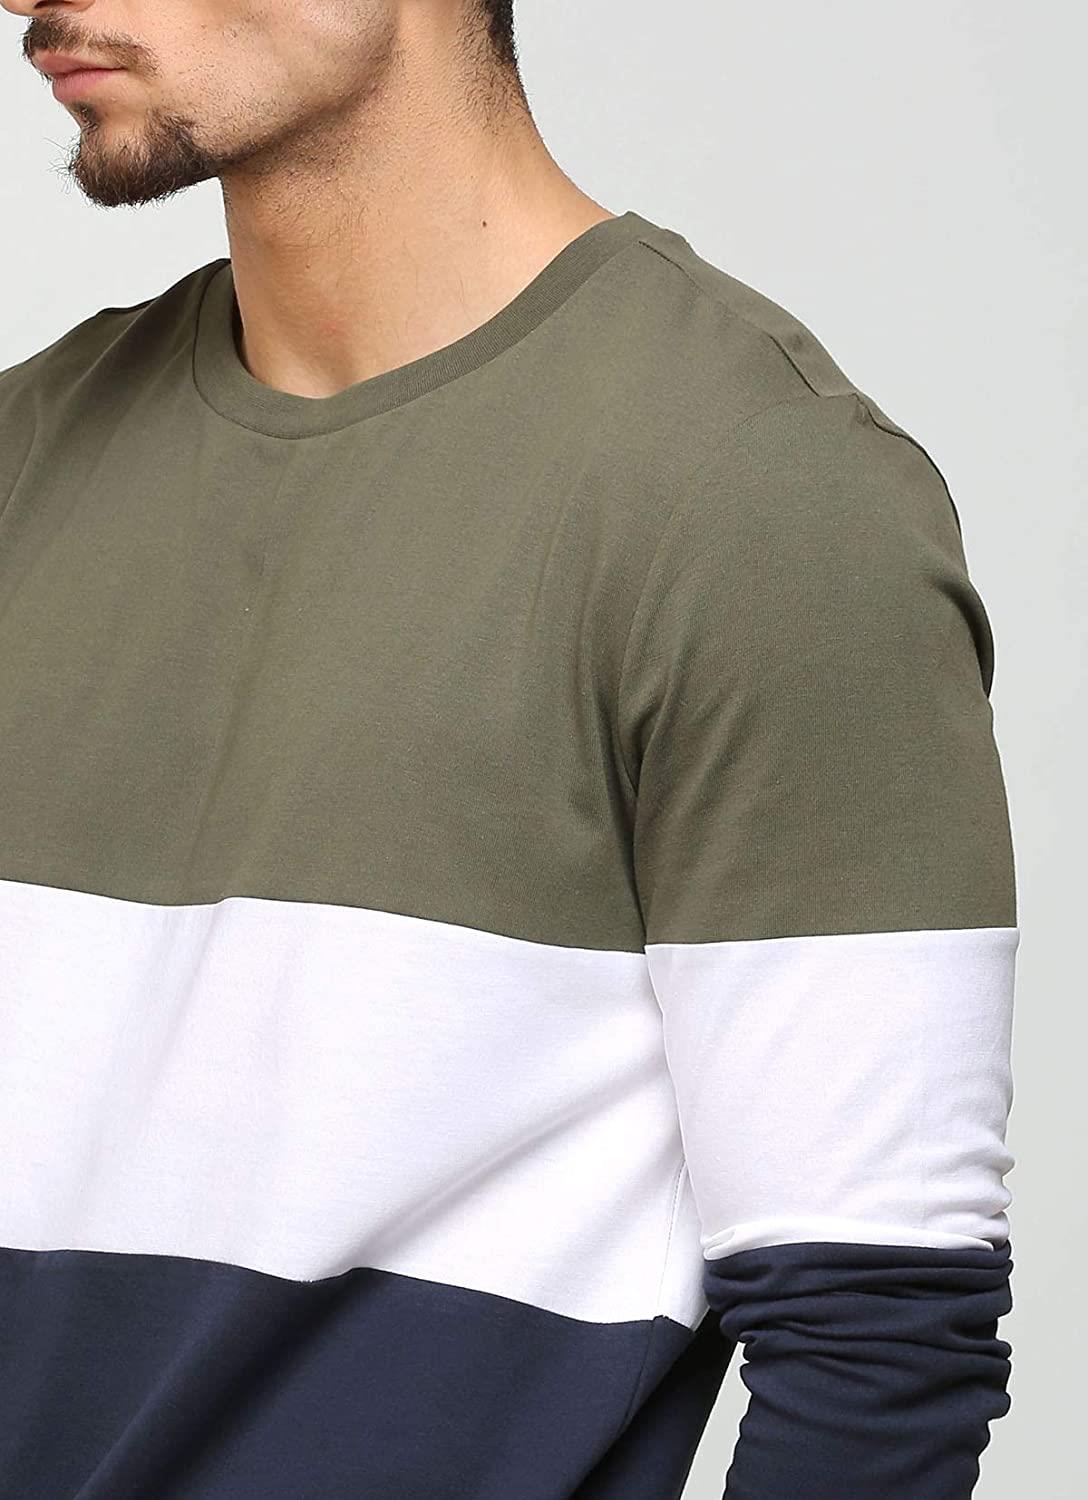 AELOMART Mens Cotton Full Sleeve T Shirt